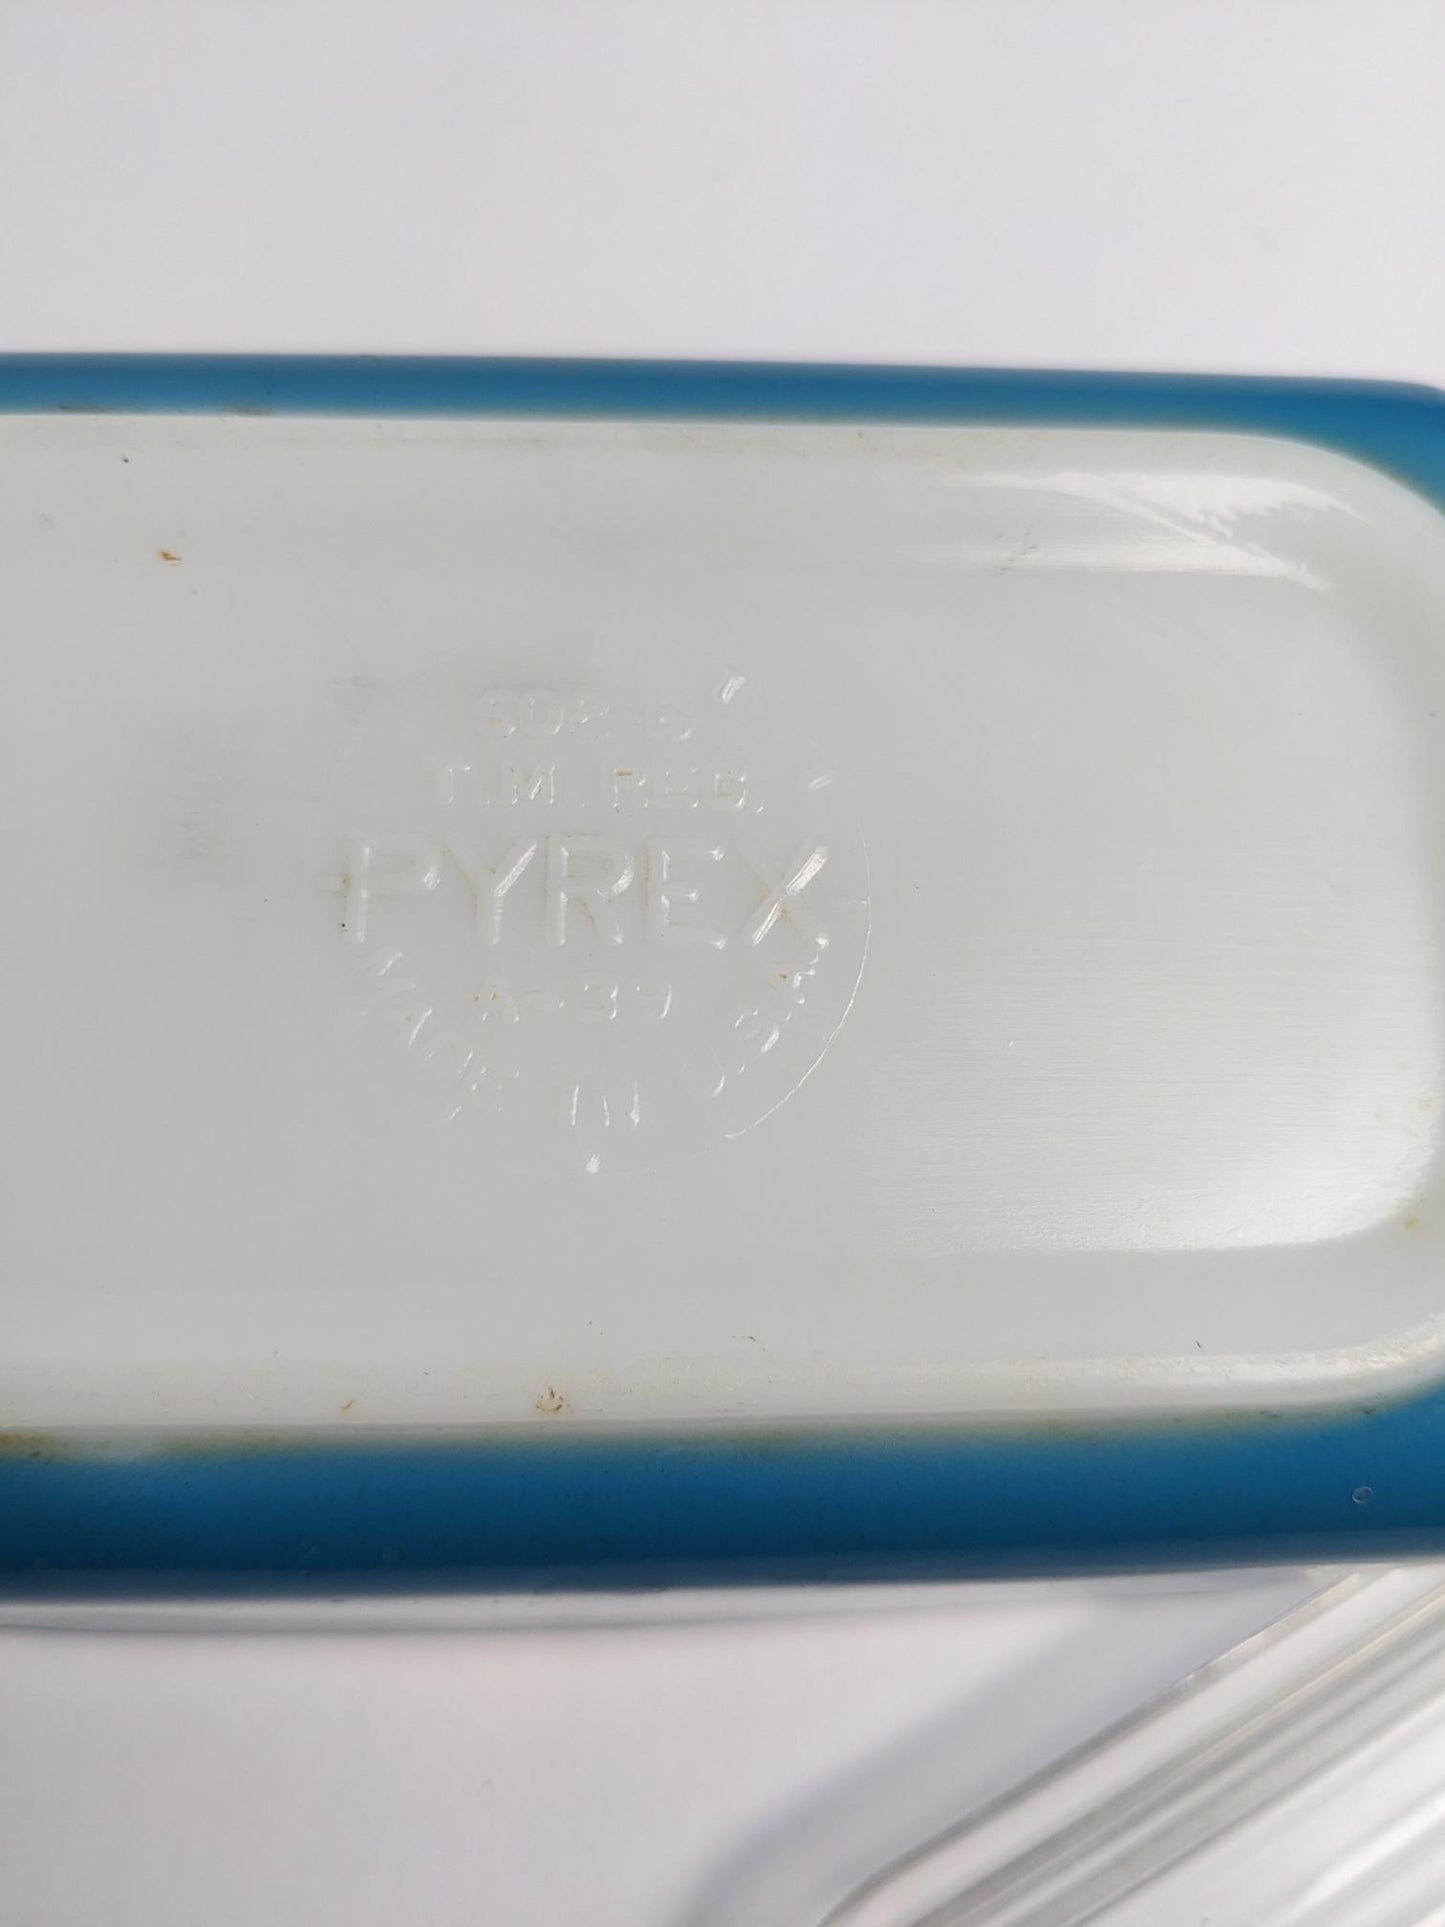 Pyrex 502-B Aqua Blue Teal Refrigerator Dish with Lid 502-C